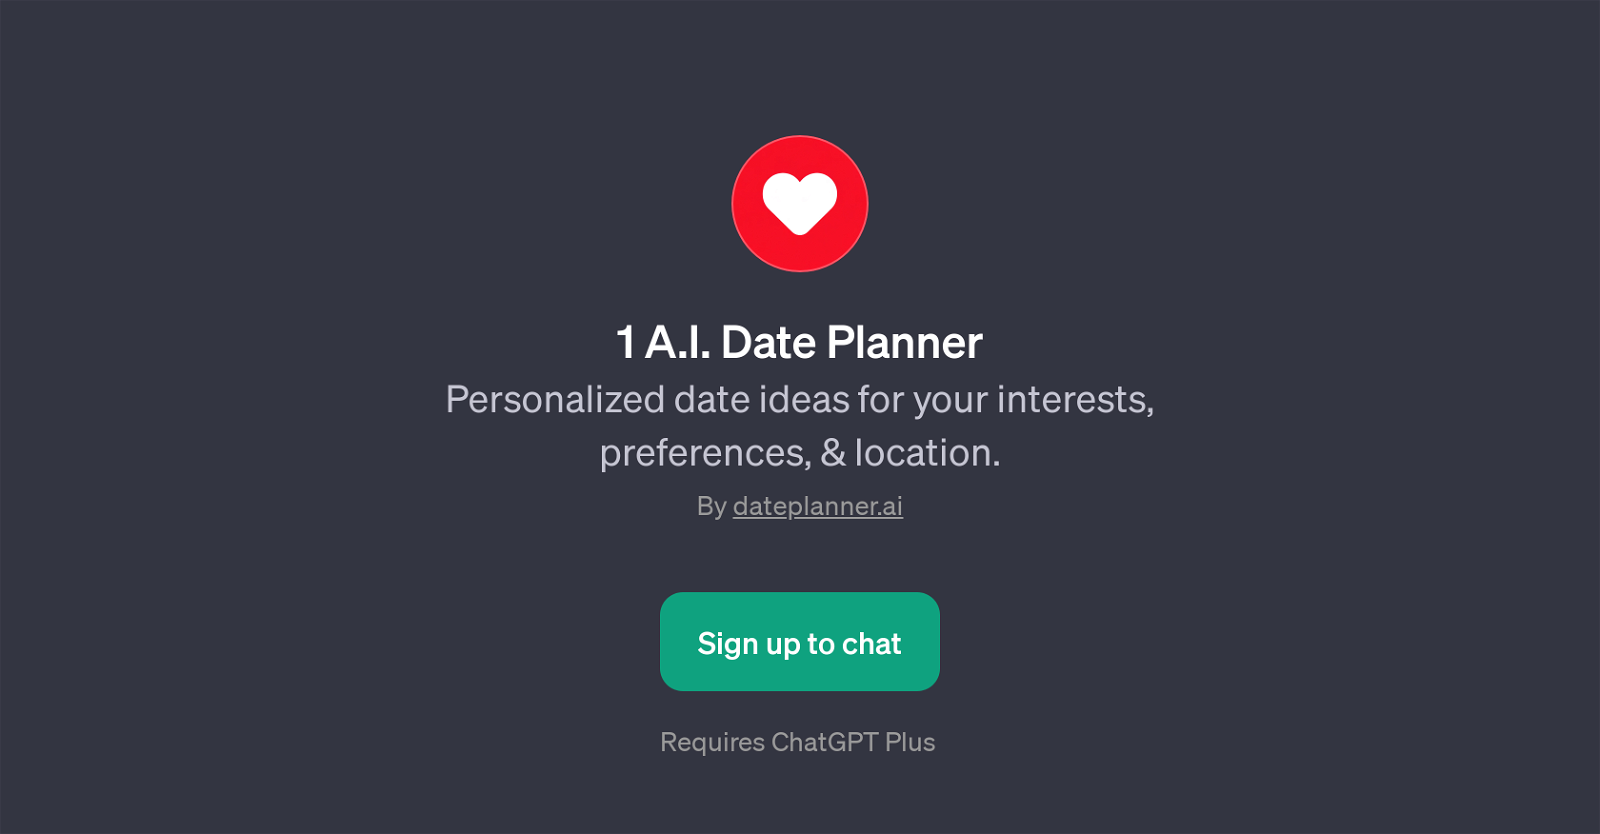 1 A.I. Date Planner website